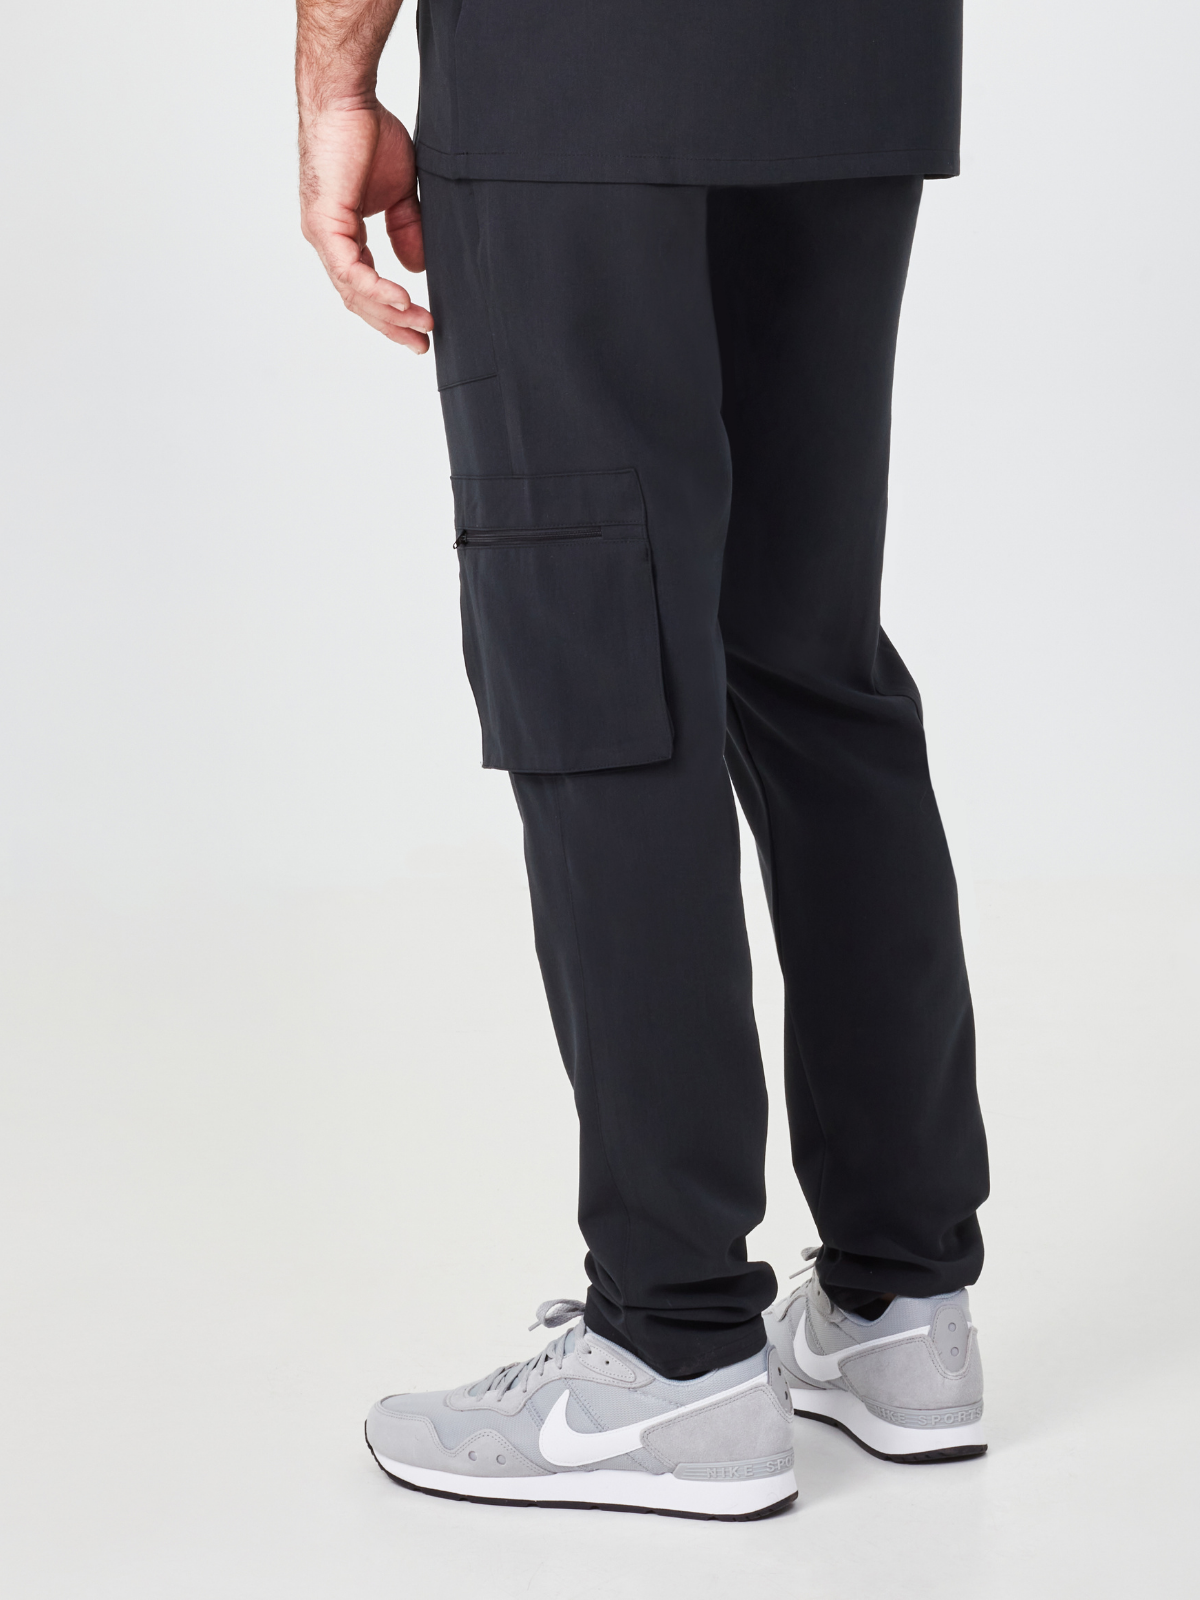 Tristan - Straight Leg 6 Pocket Scrub Pants